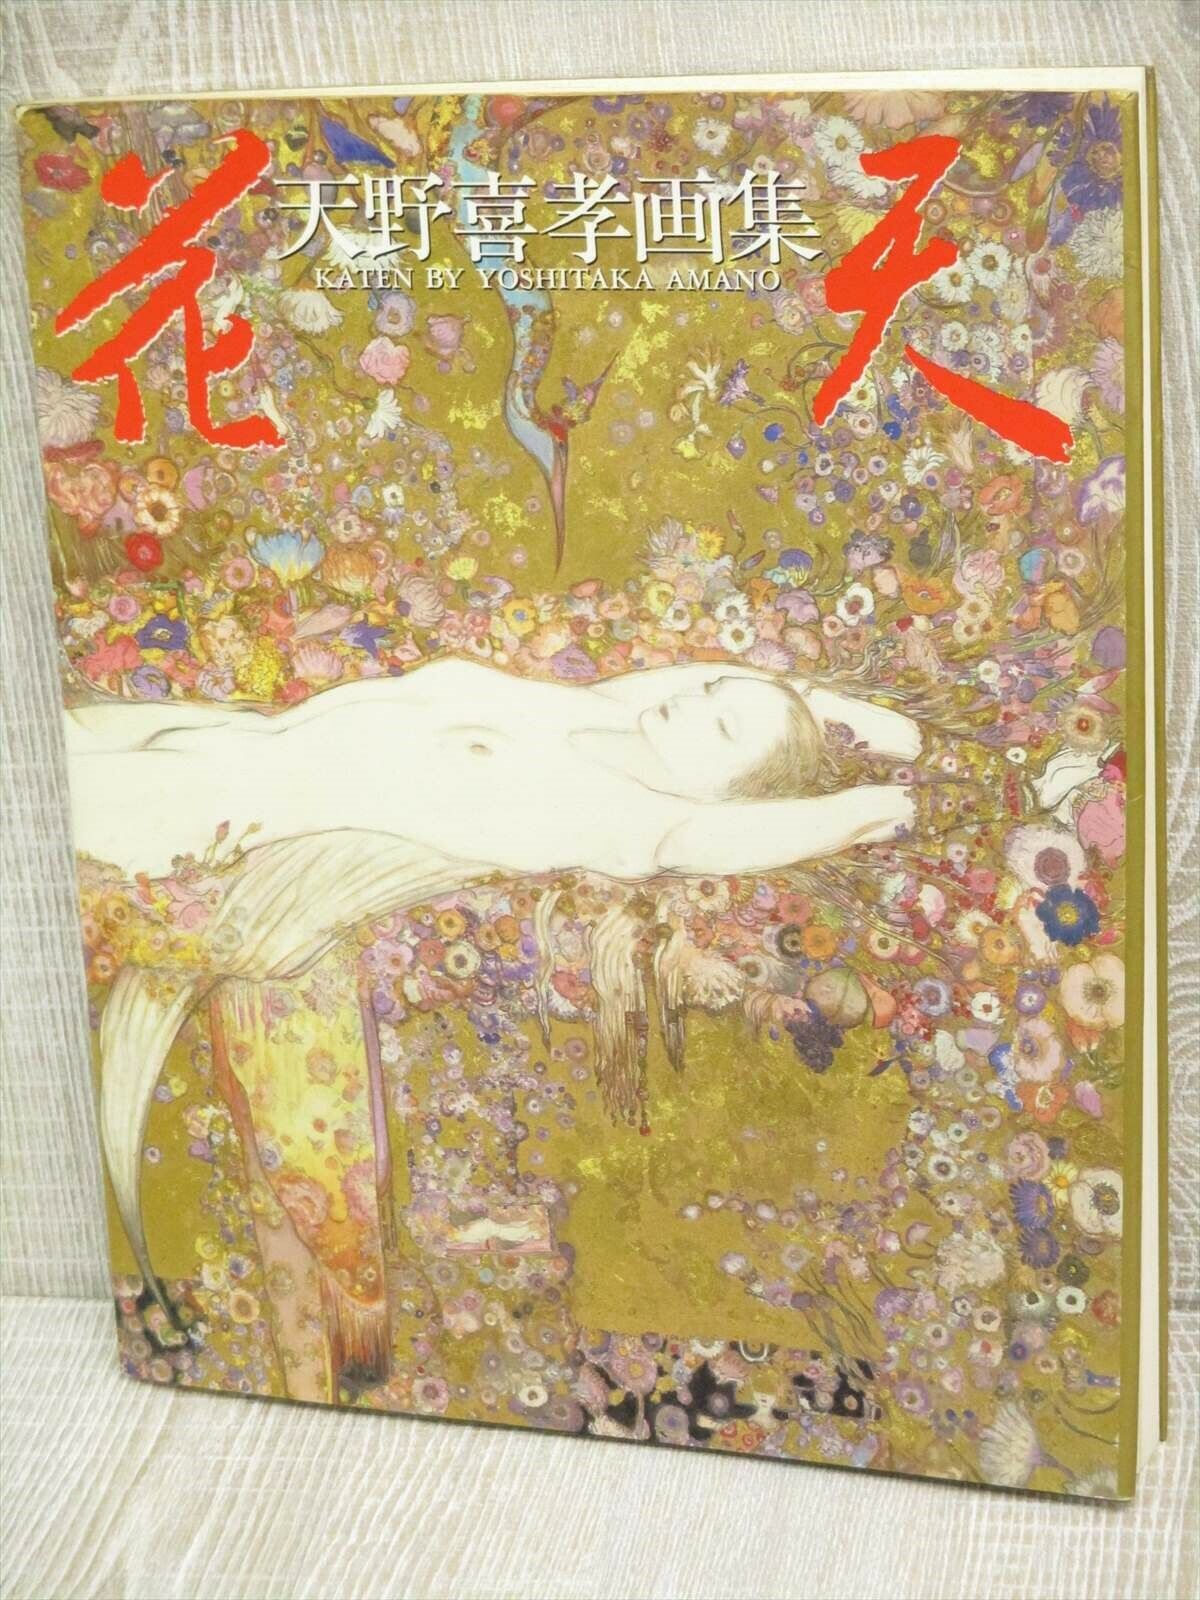 AMANO YOSHITAKA Art Works KATEN Gashu Fan Book 1994 Japan KO83